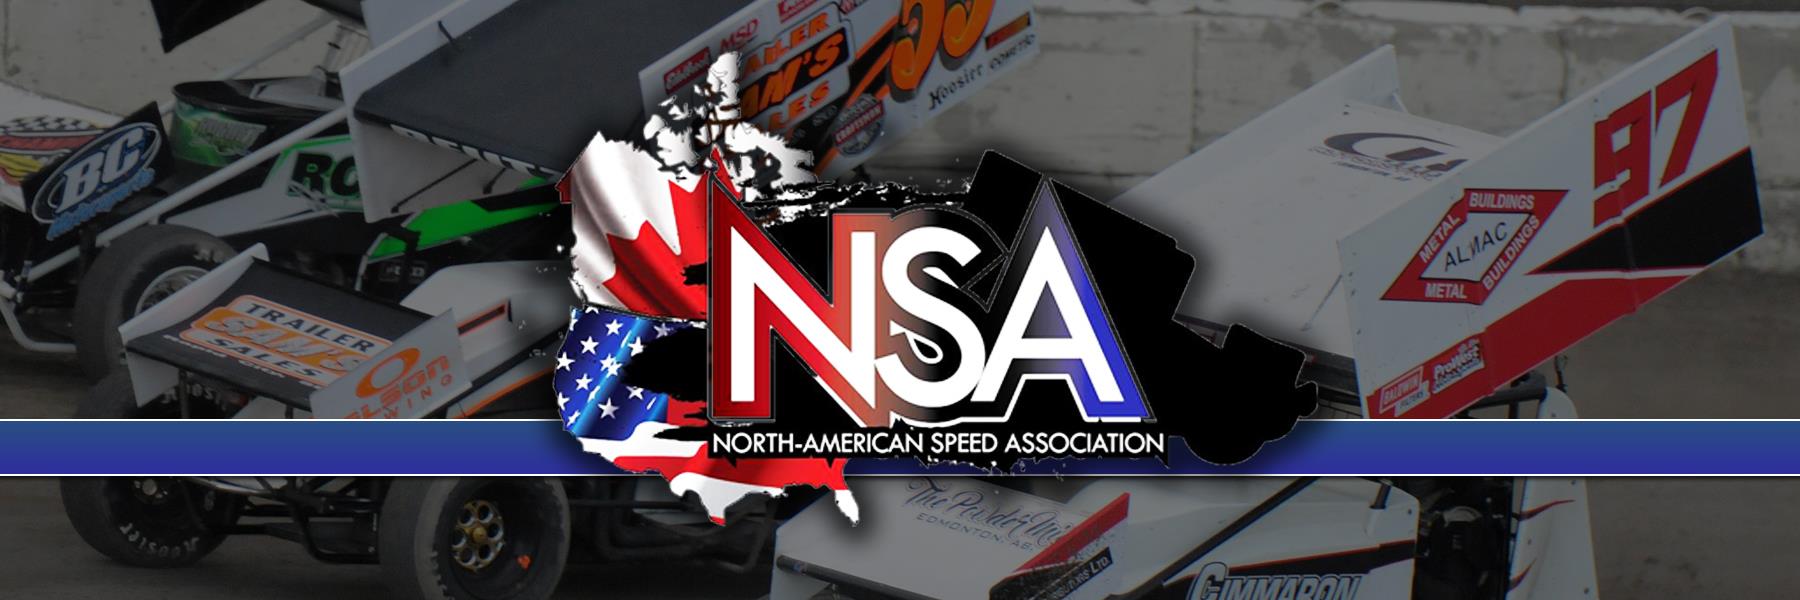 North-American Speed Association